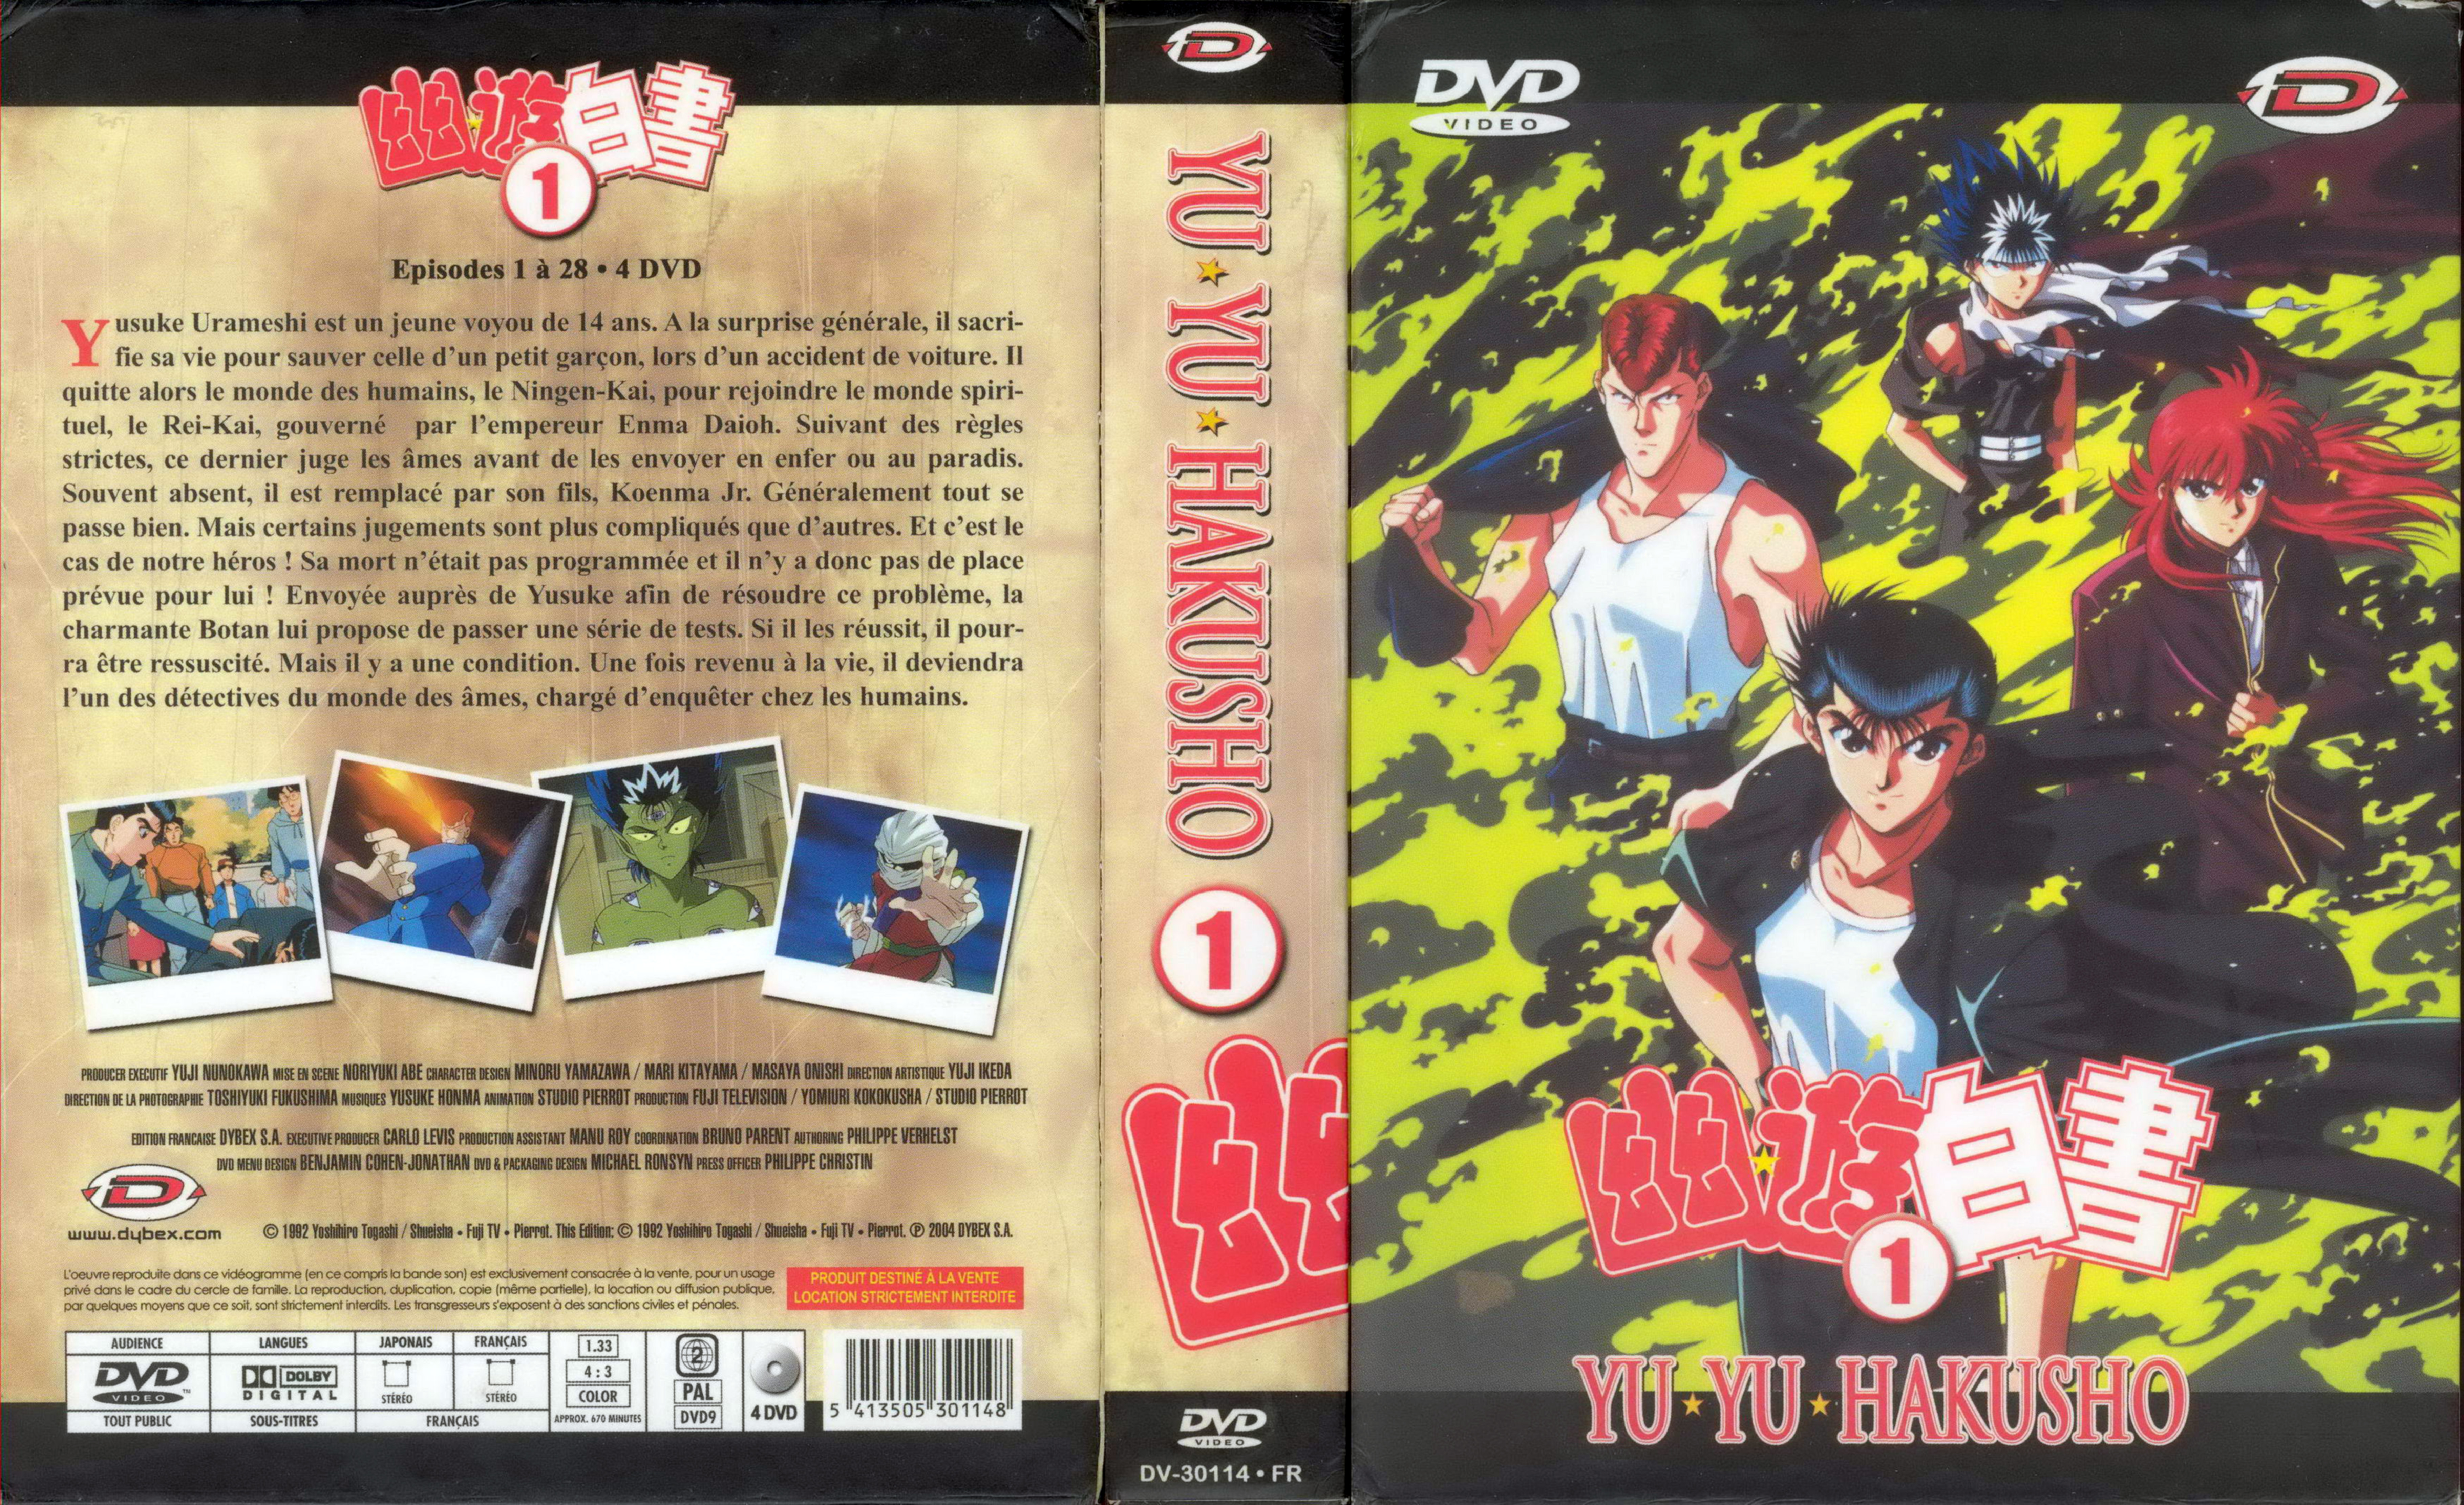 Jaquette DVD Yu yu hakusho COFFRET 1